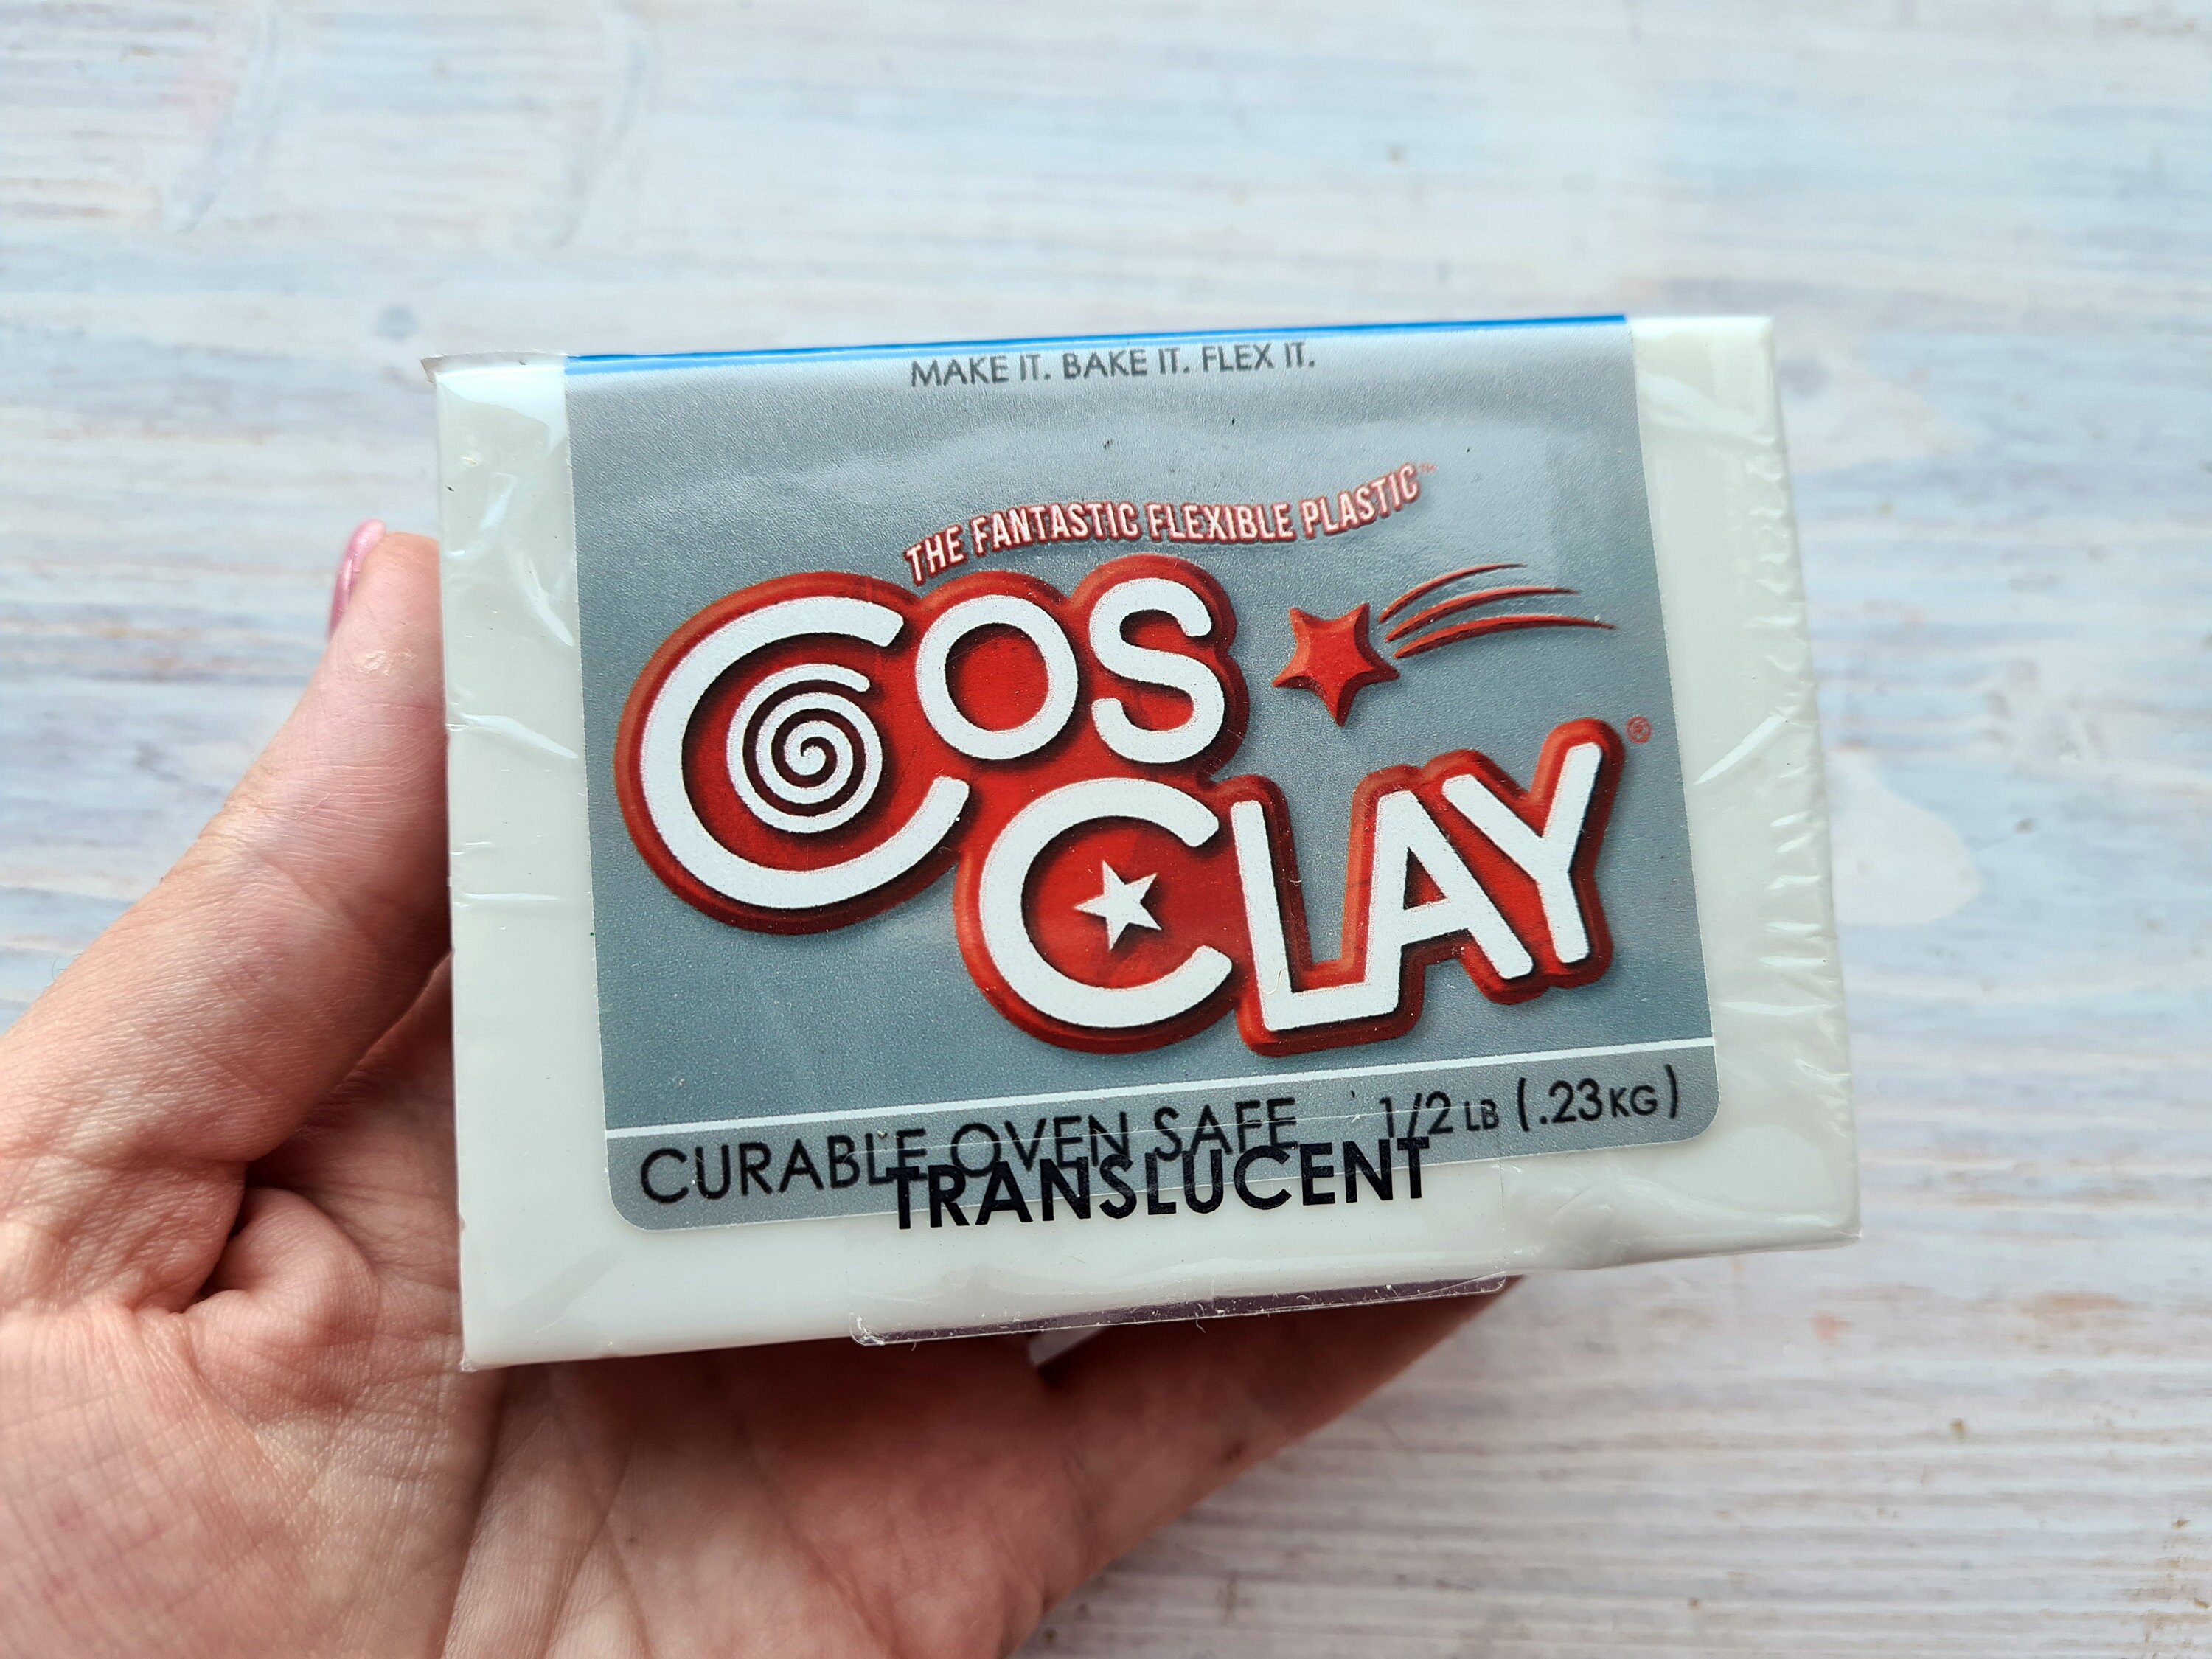 Cosclay ELEMENTS: Translucent — Cosclay